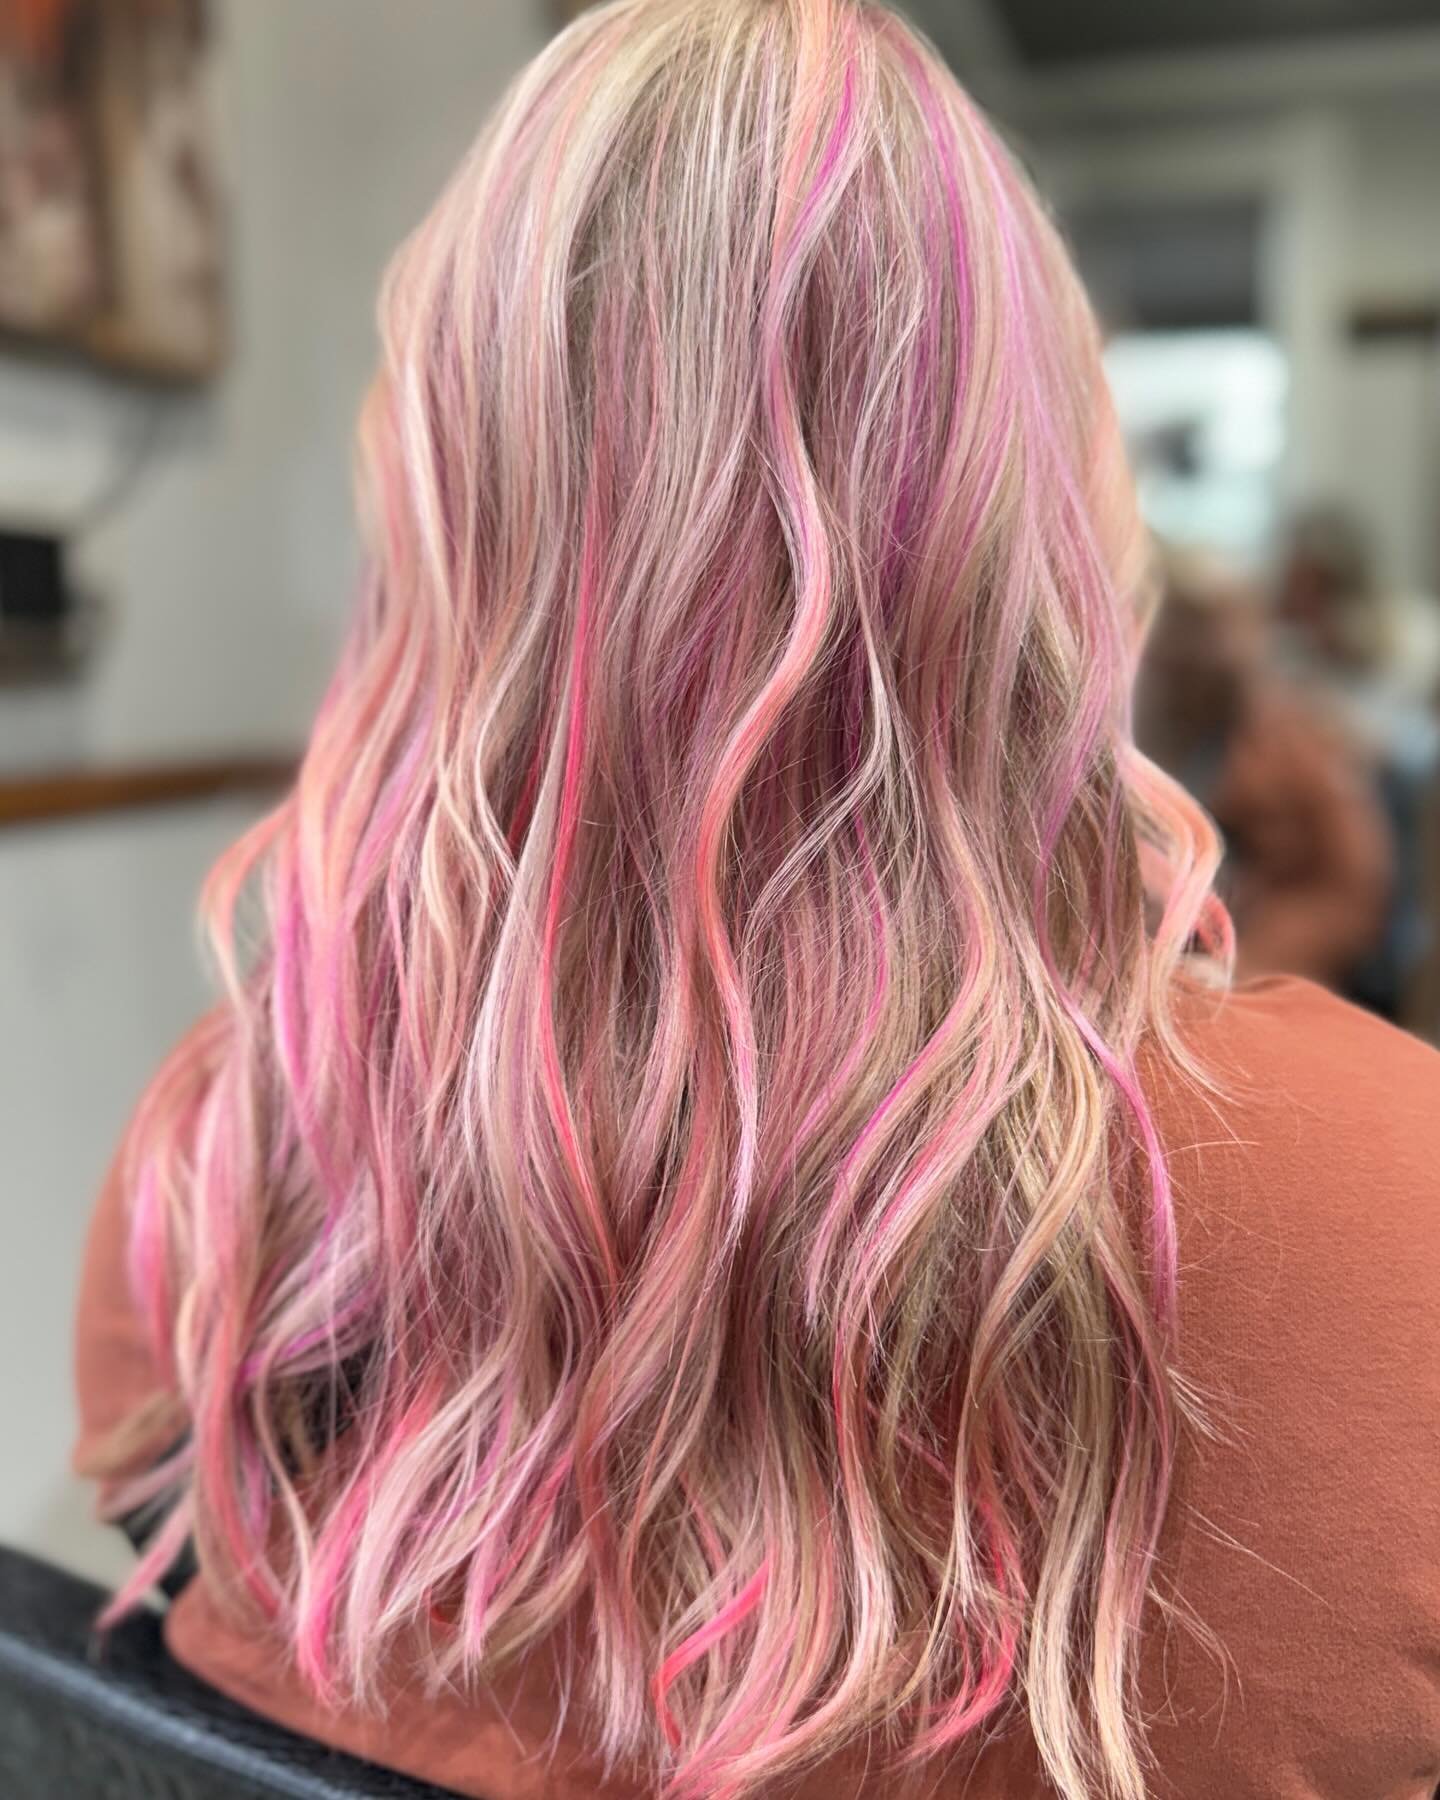 Candy colored sunset ✨☁️🌅

#salon #hairstylist #hair #pinkhair #pinkhairdontcare #bloominglemon #laramie #wyoming ☁️